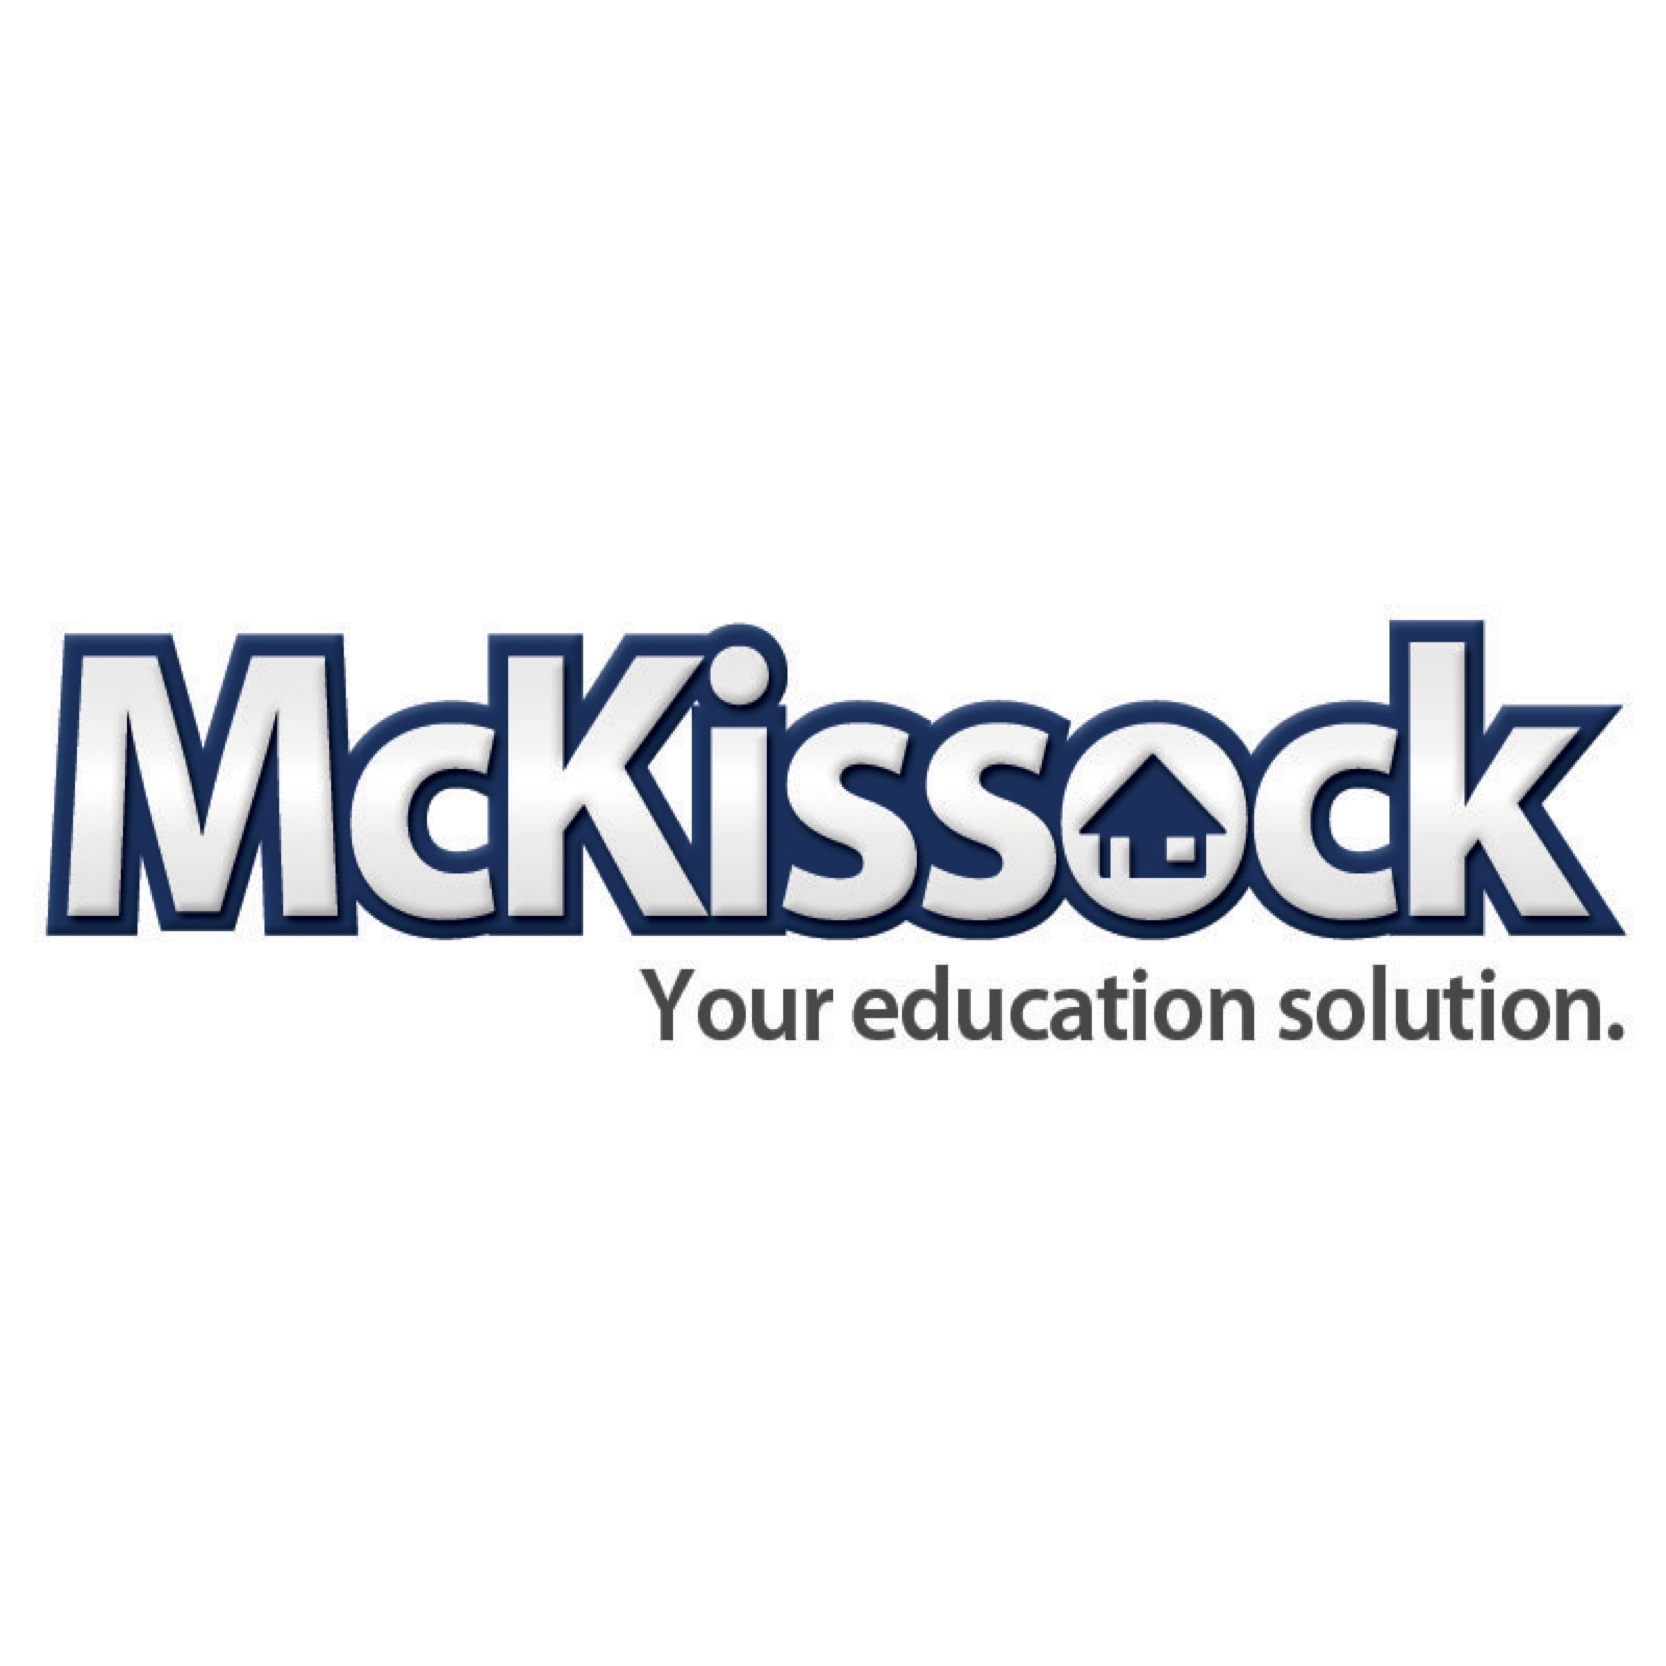 McKissock